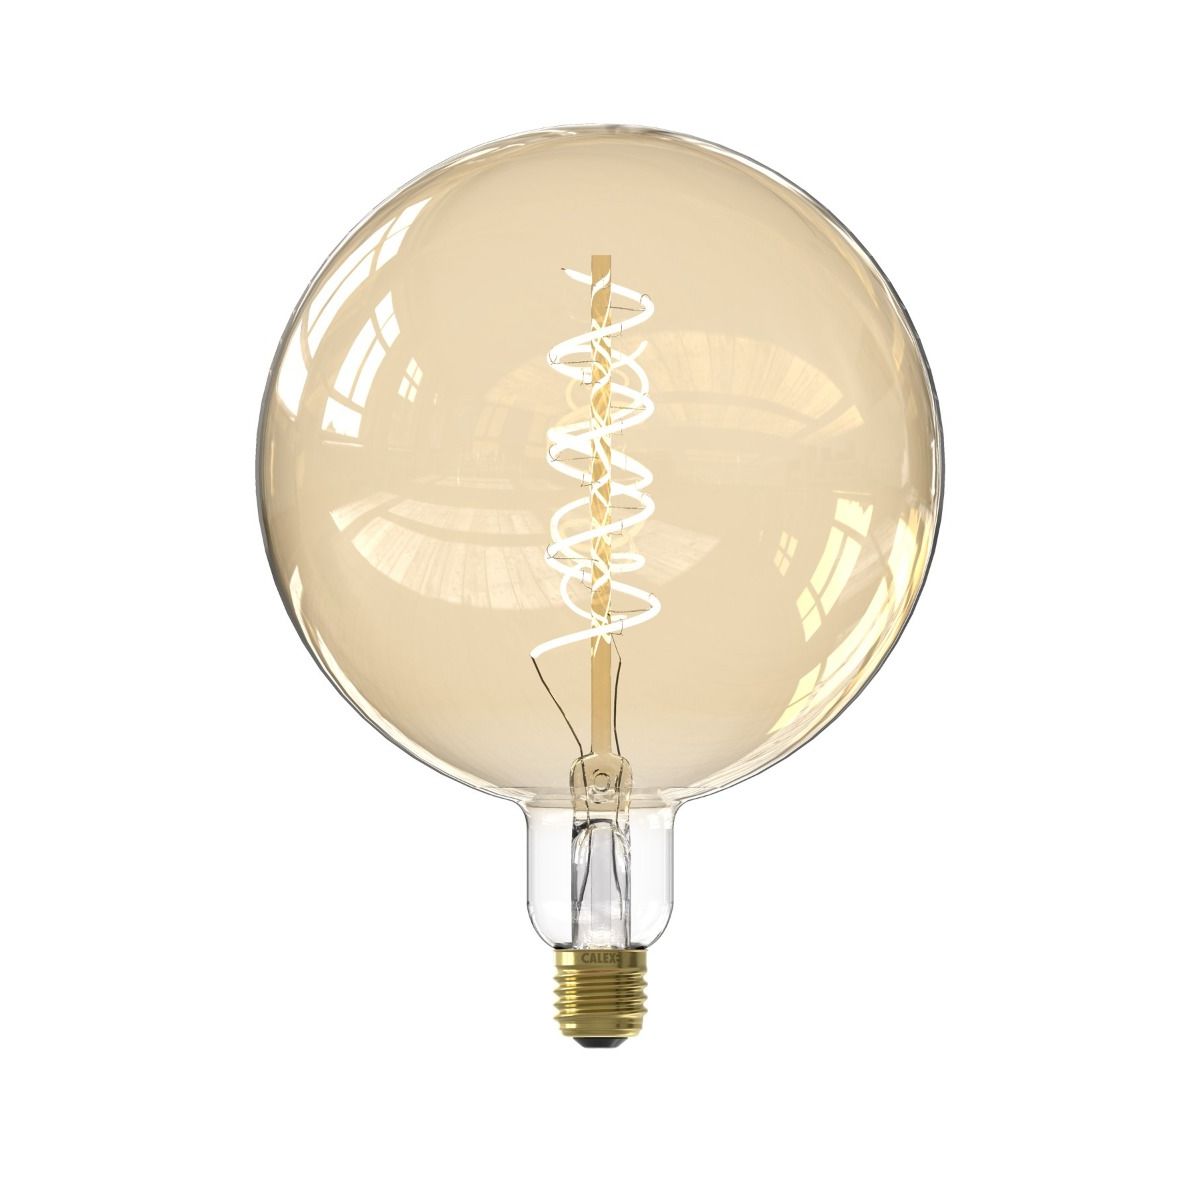 Vader fage brug Wreedheid Calex Smart XXL LED lamp - Ø 20 x 26,5 cm - E27 - 5W - dimfunctie via app -  2000K - goud